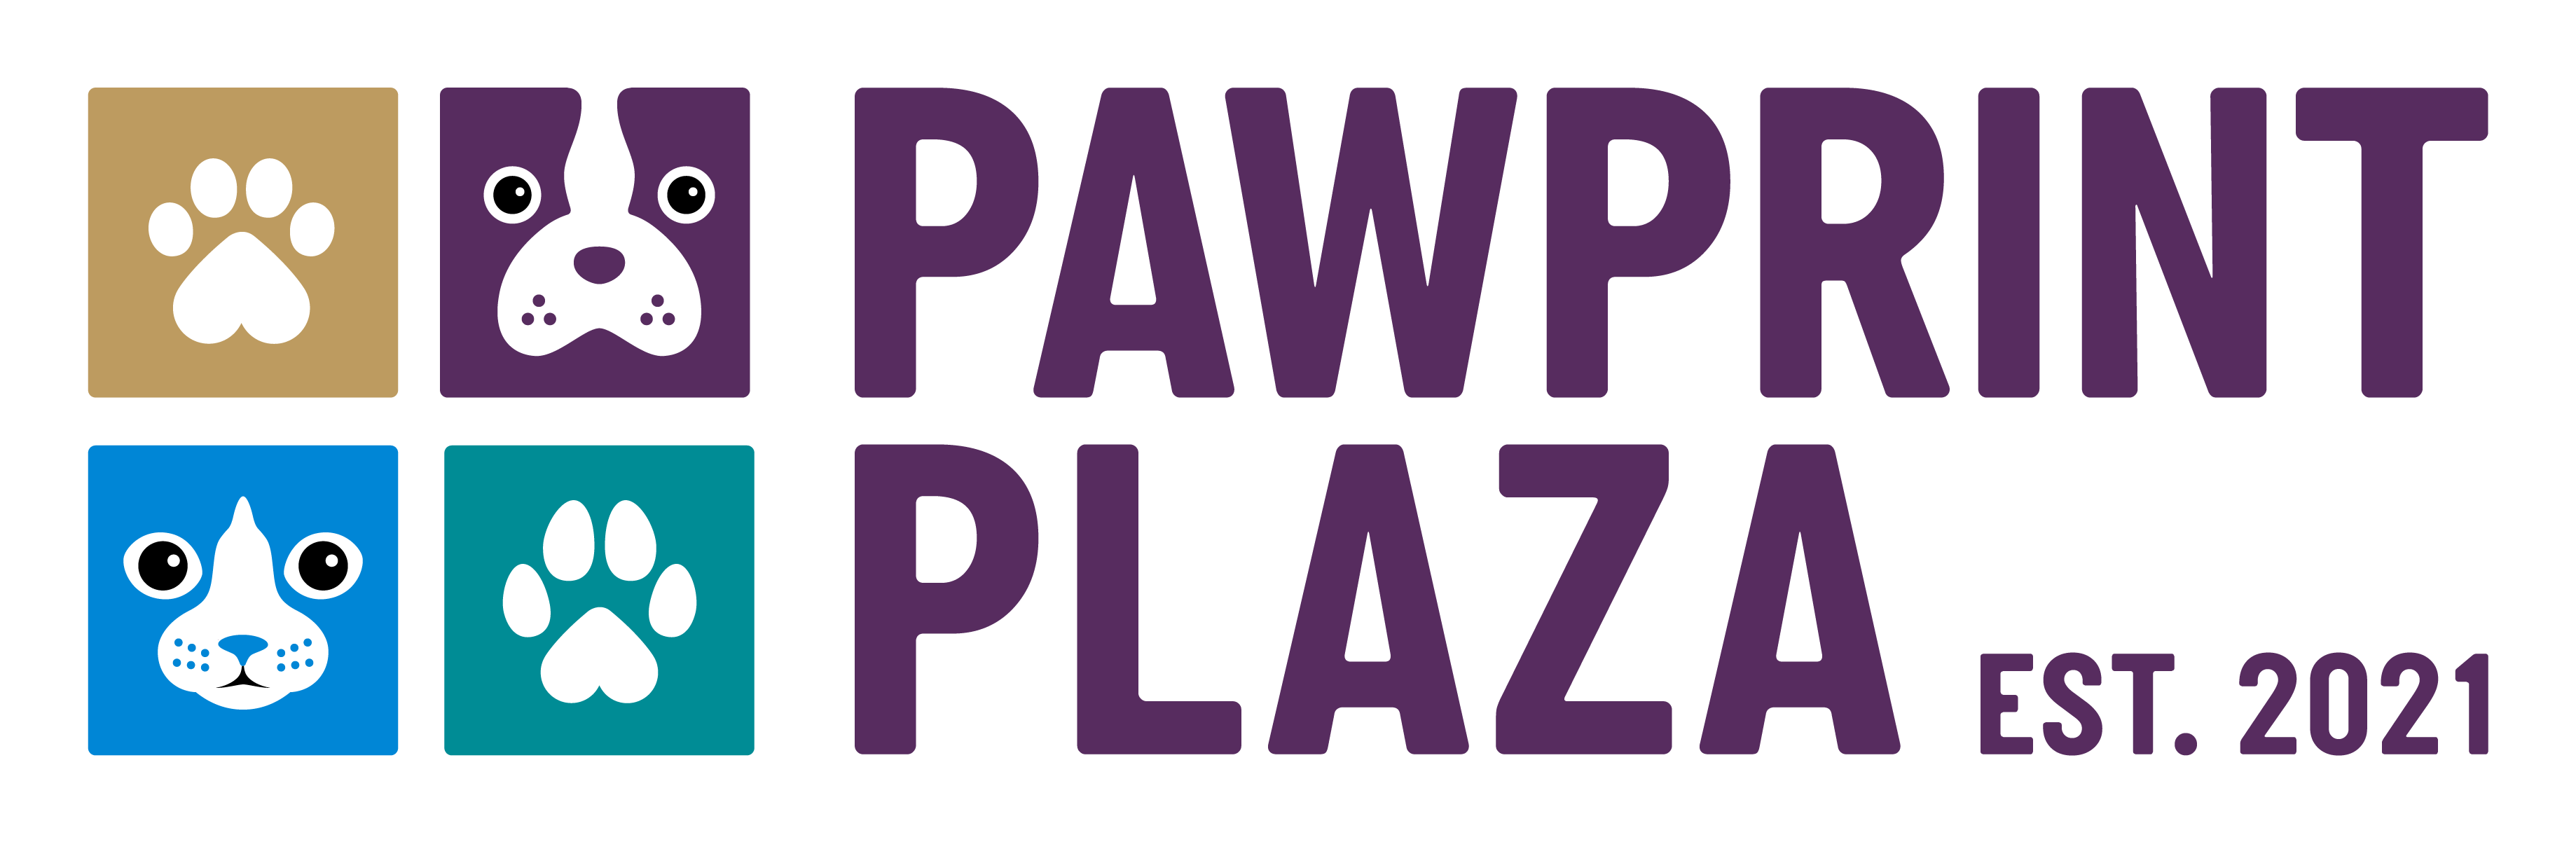 Pawprint plaza Logo